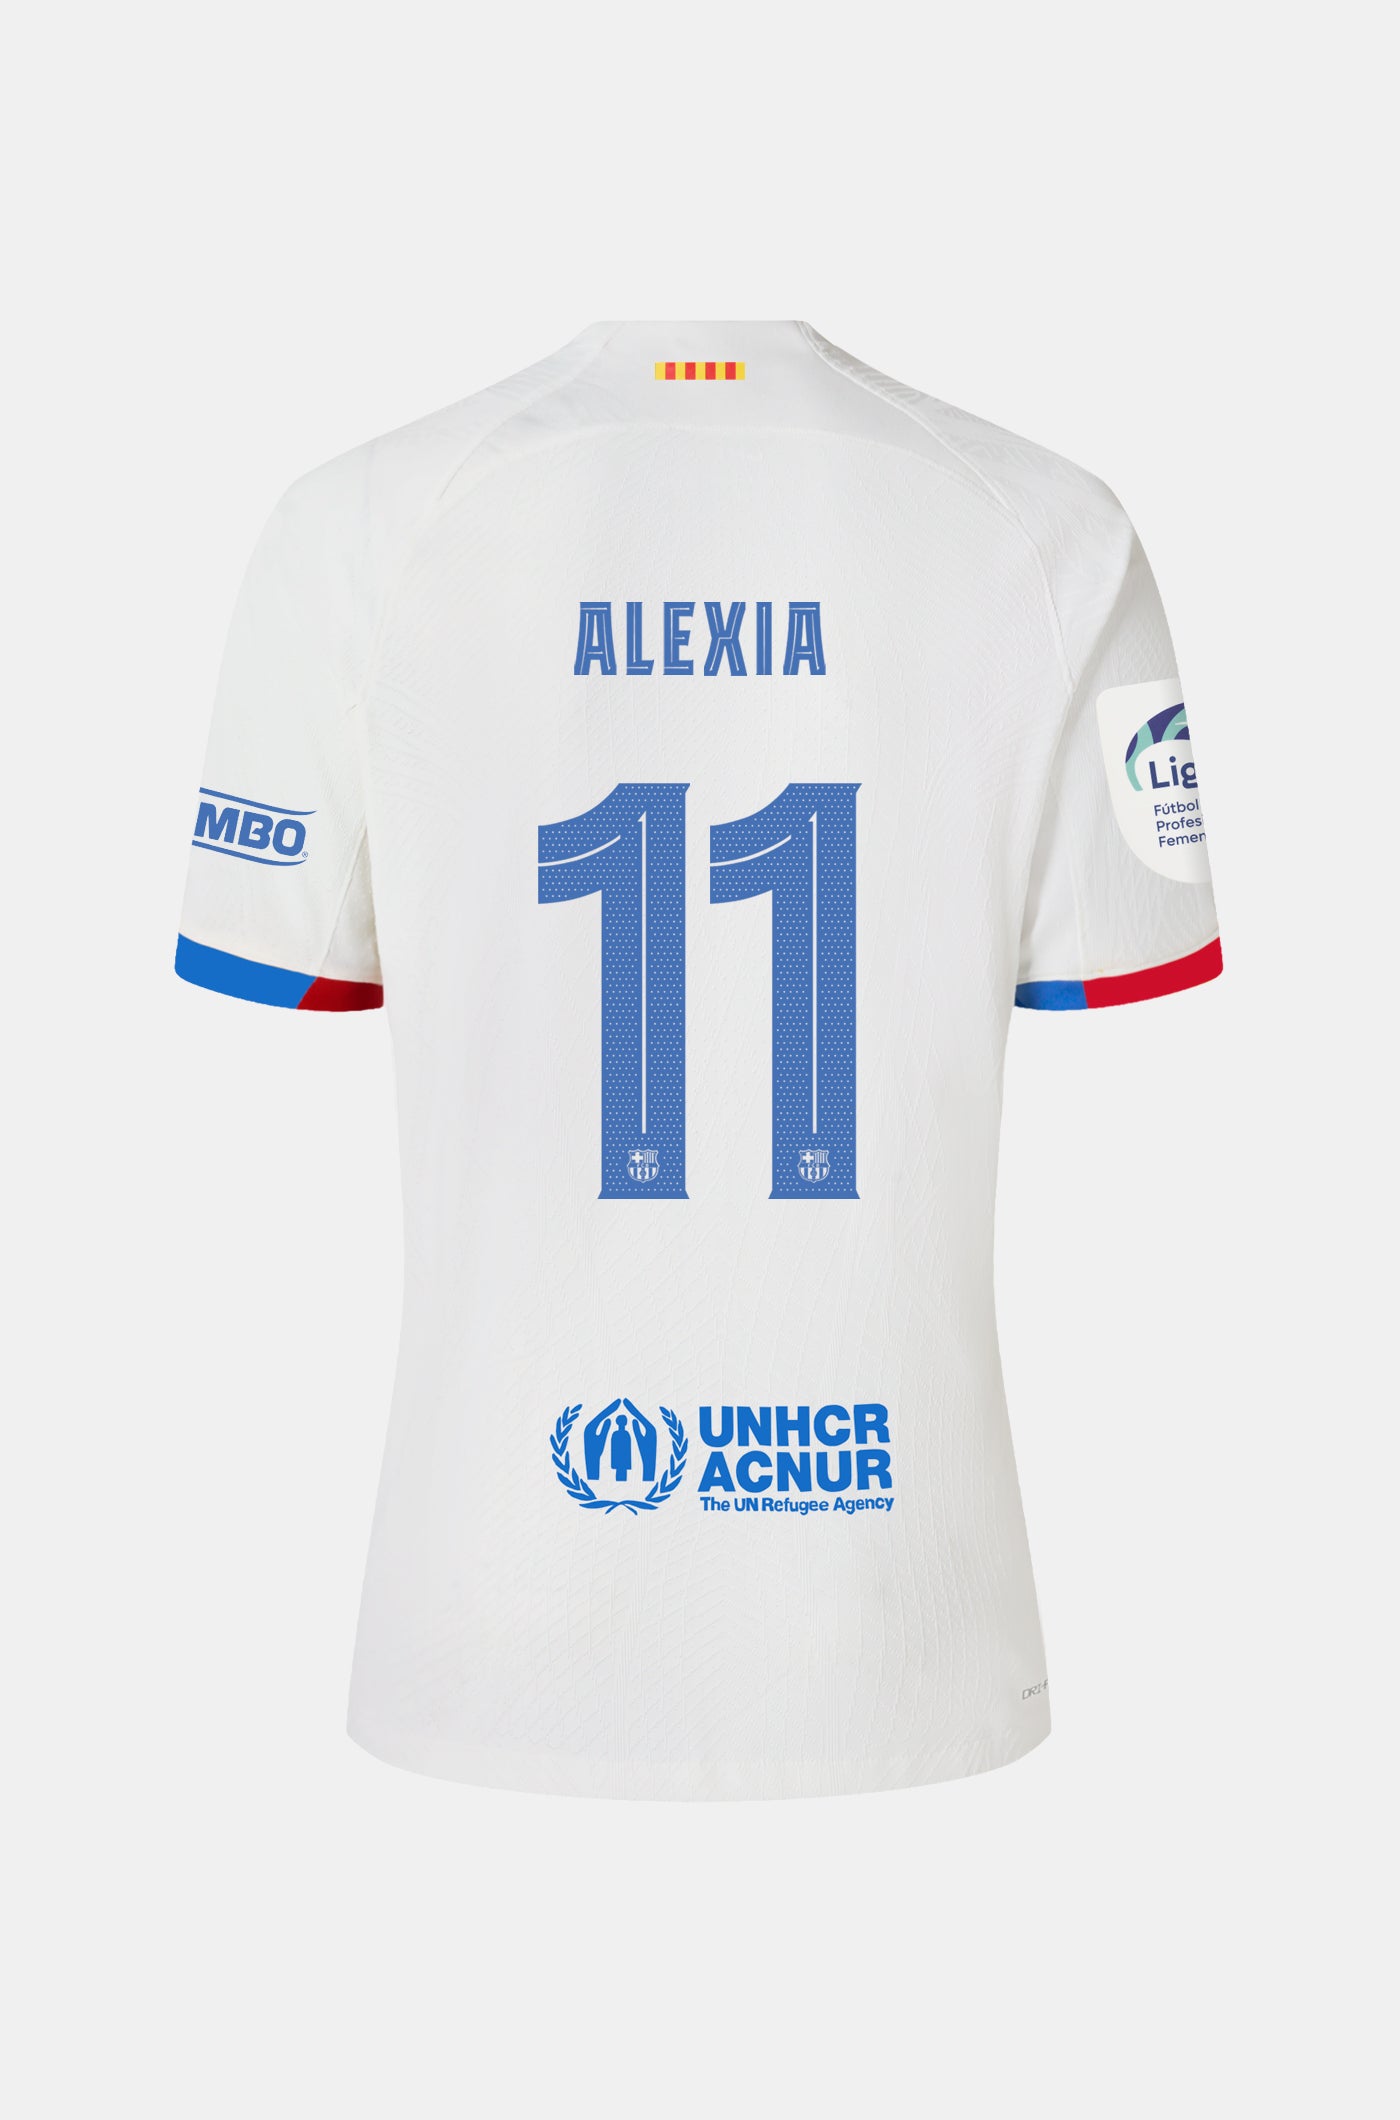 Liga F FC Barcelona away Shirt 23/24 Player’s Edition - Women  - ALEXIA